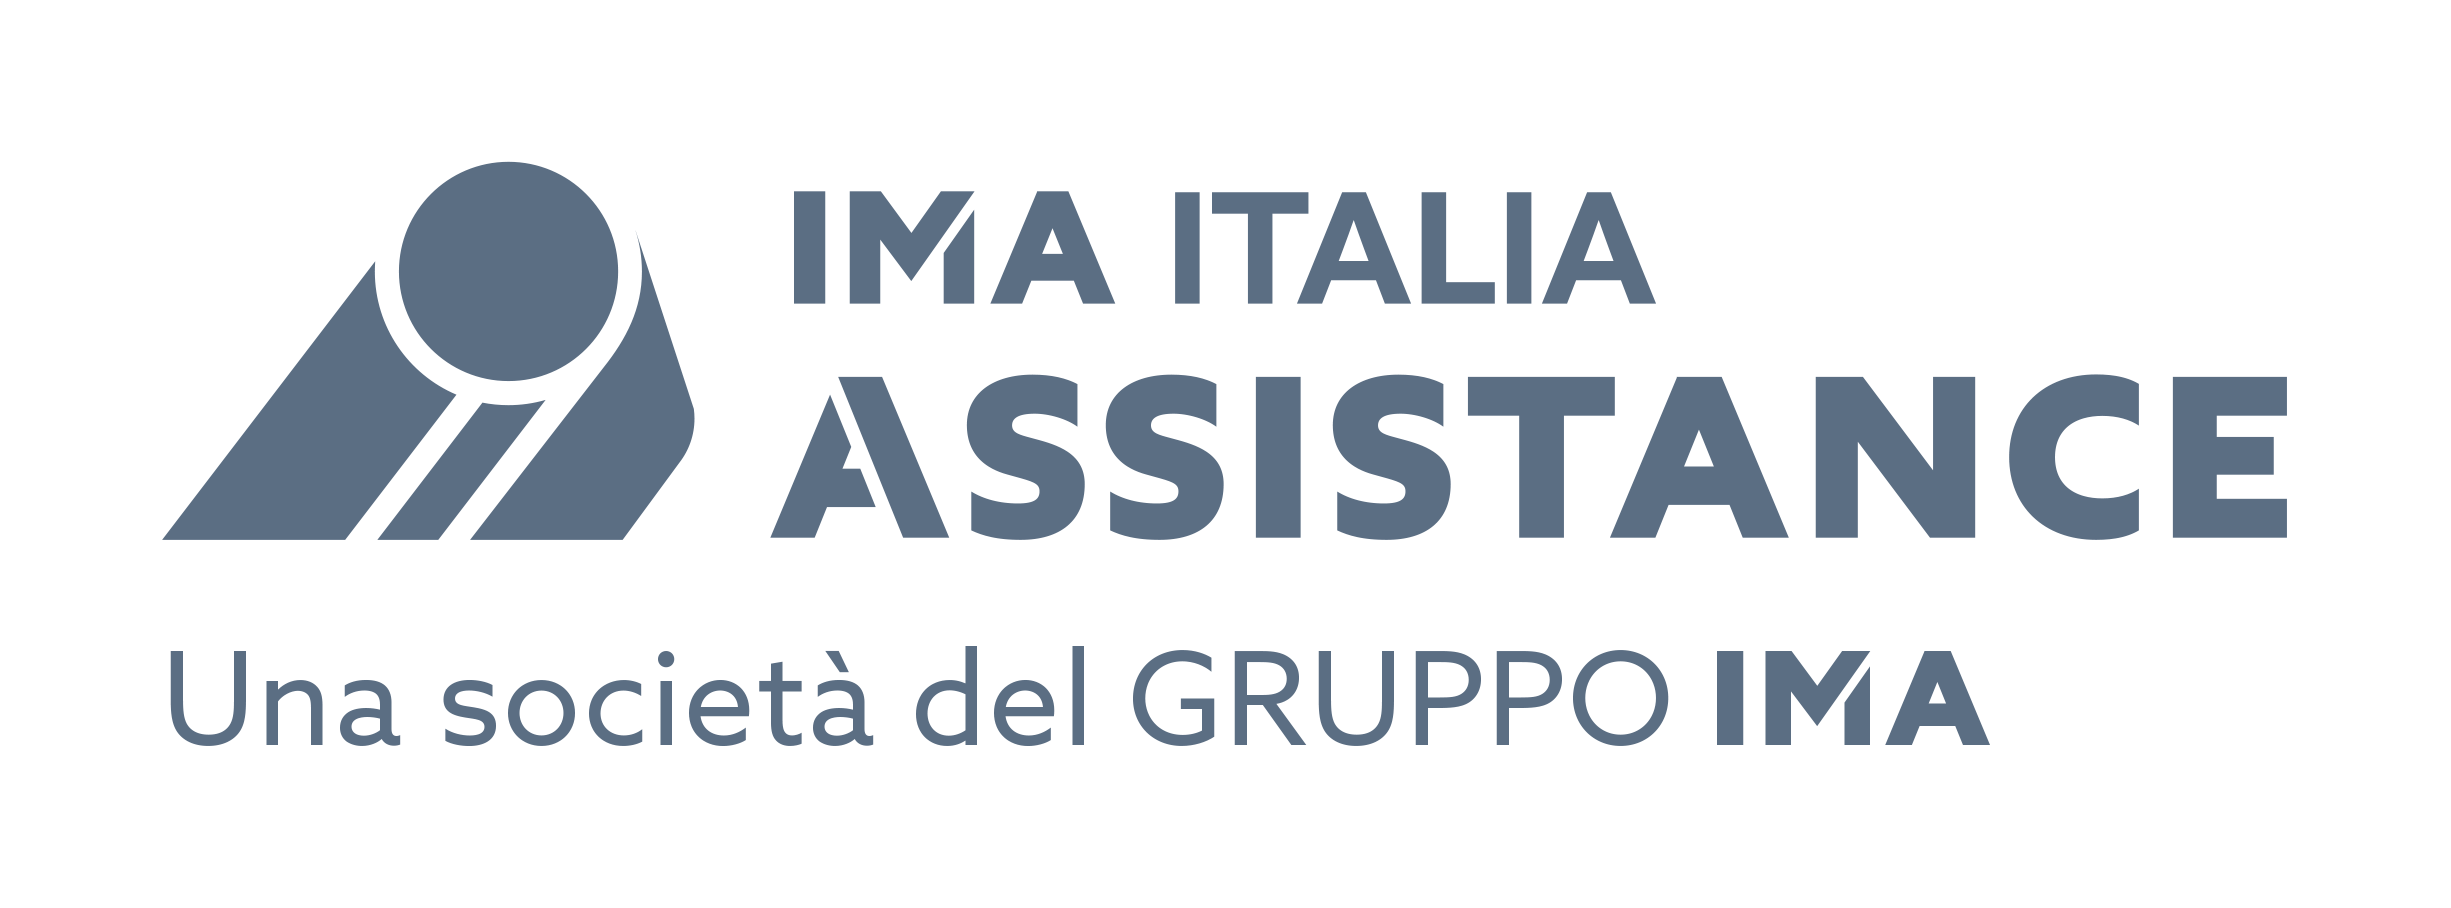 6Sicuroevai Logo IMA Italia Assitance